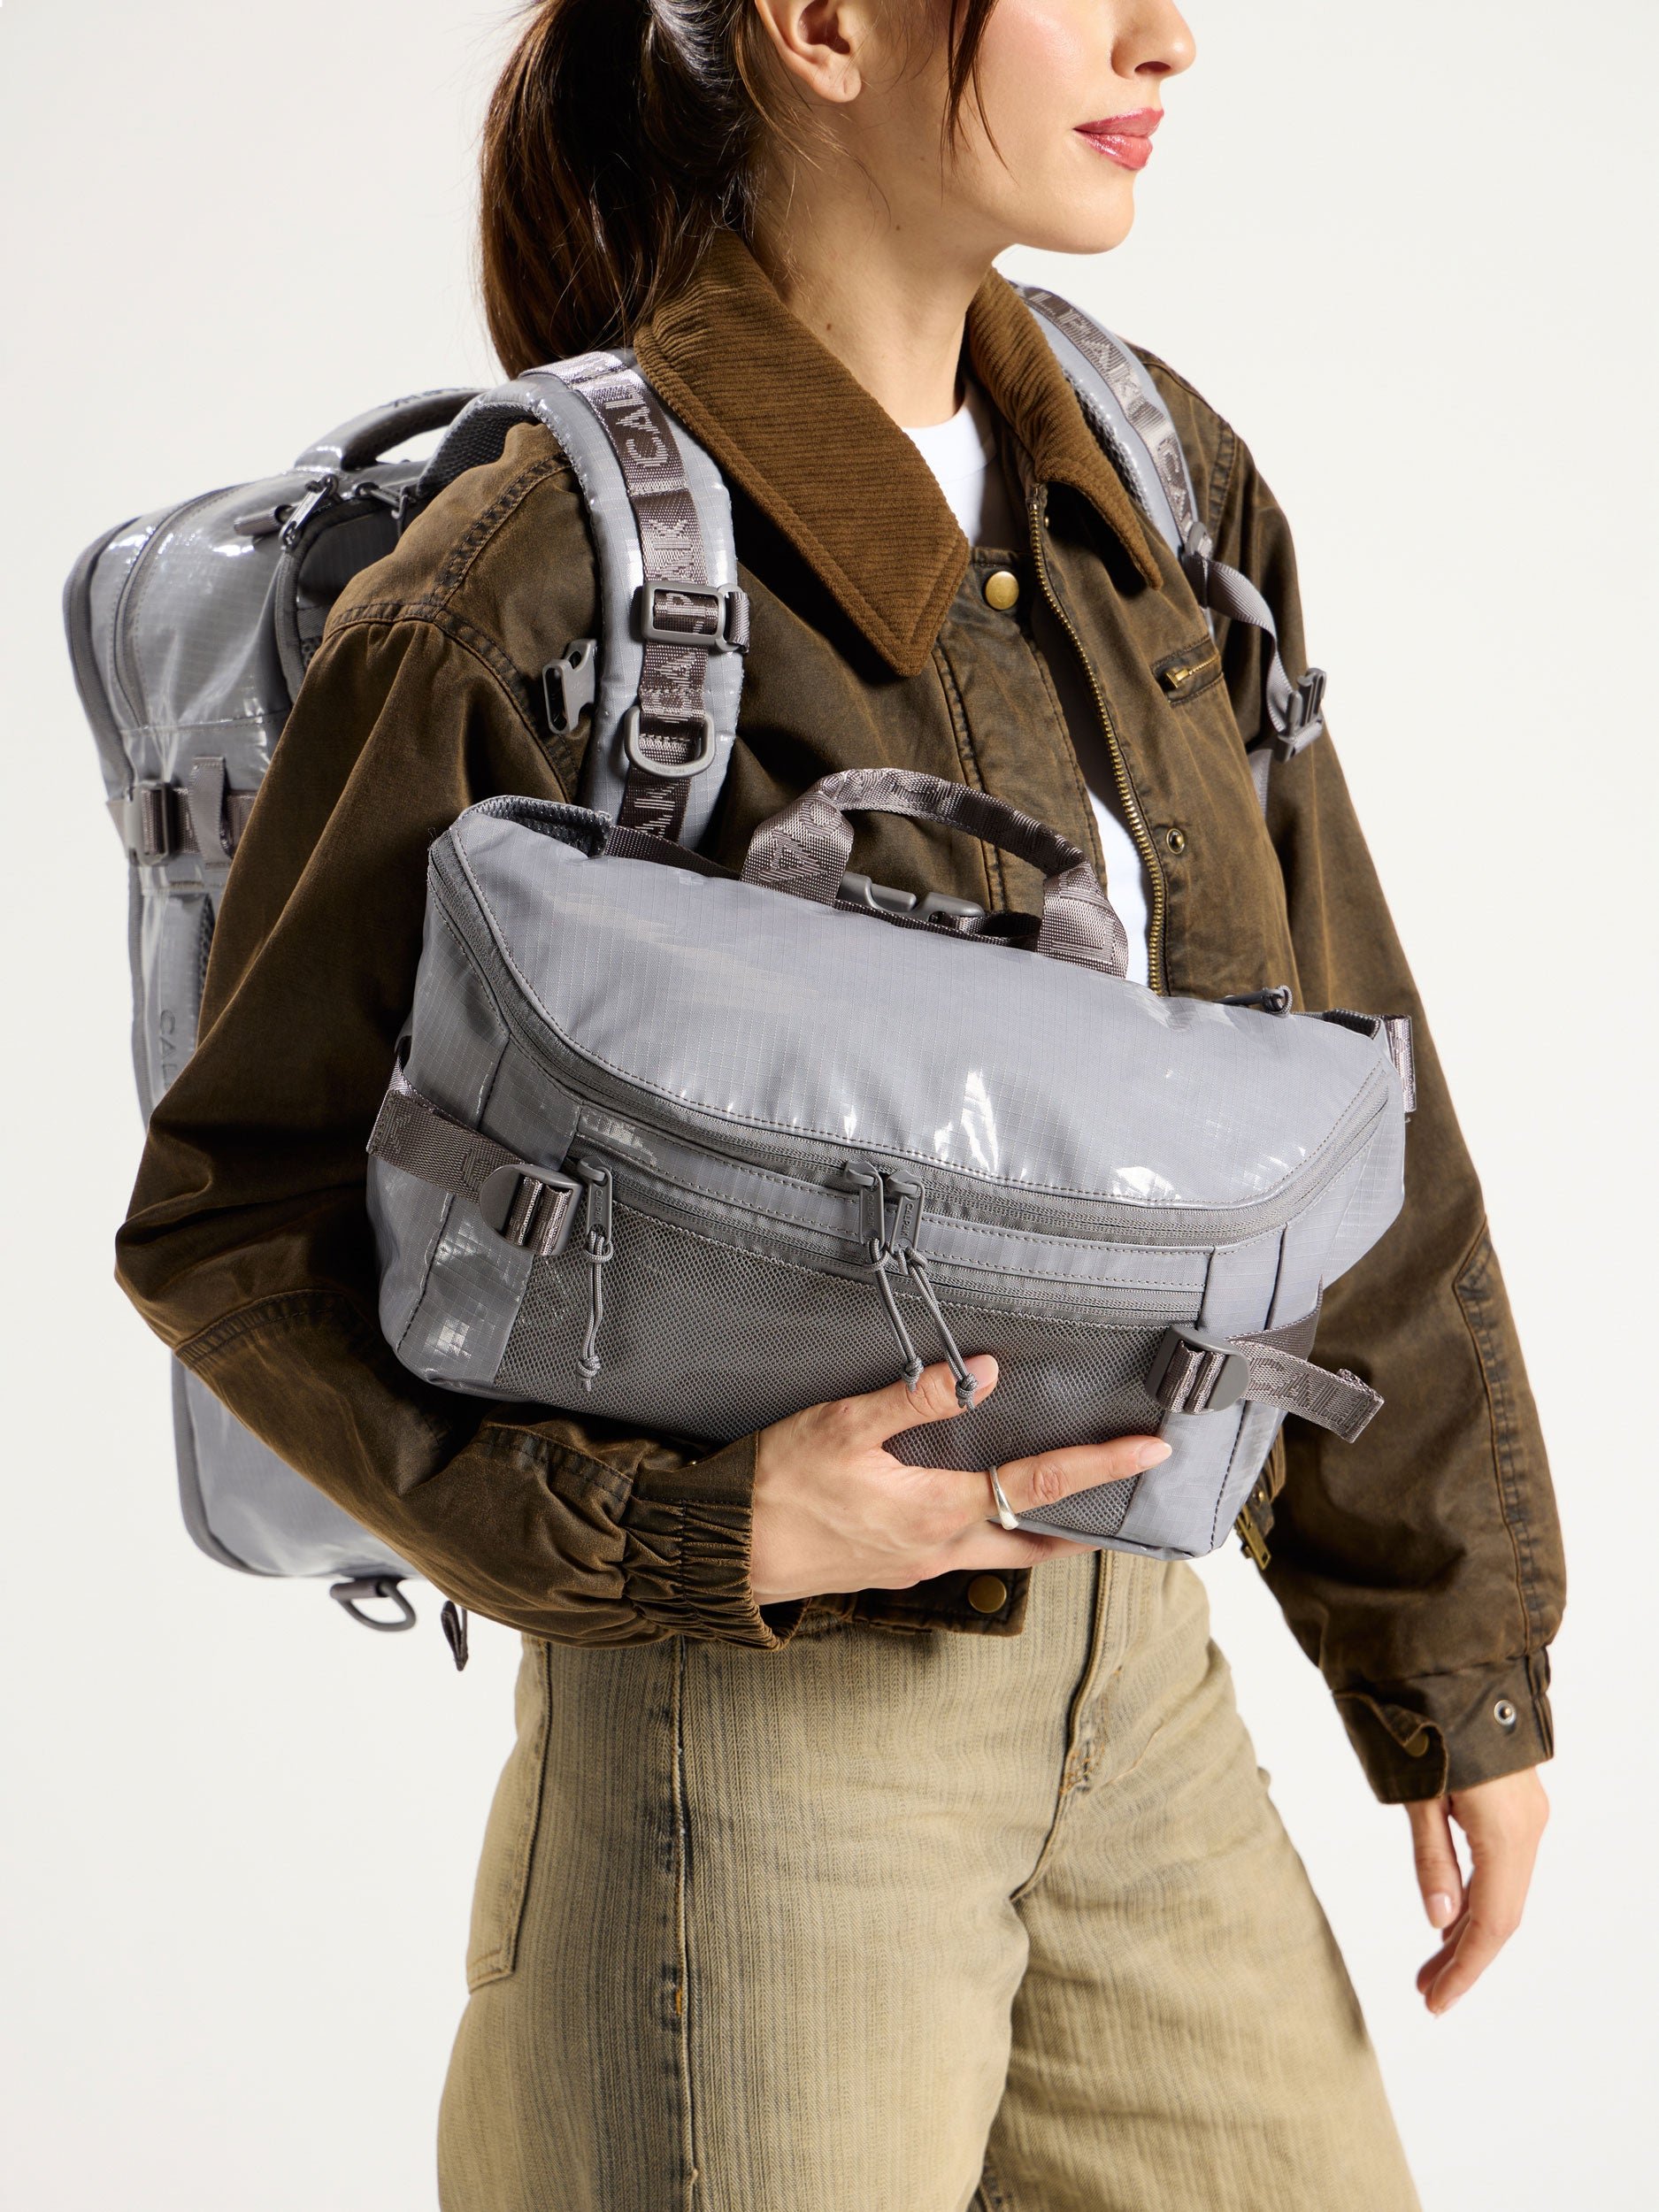 Model wearing CALPAK Terra 26L Laptop Backpack Duffel while holding gray Terra Sling Bag in arm